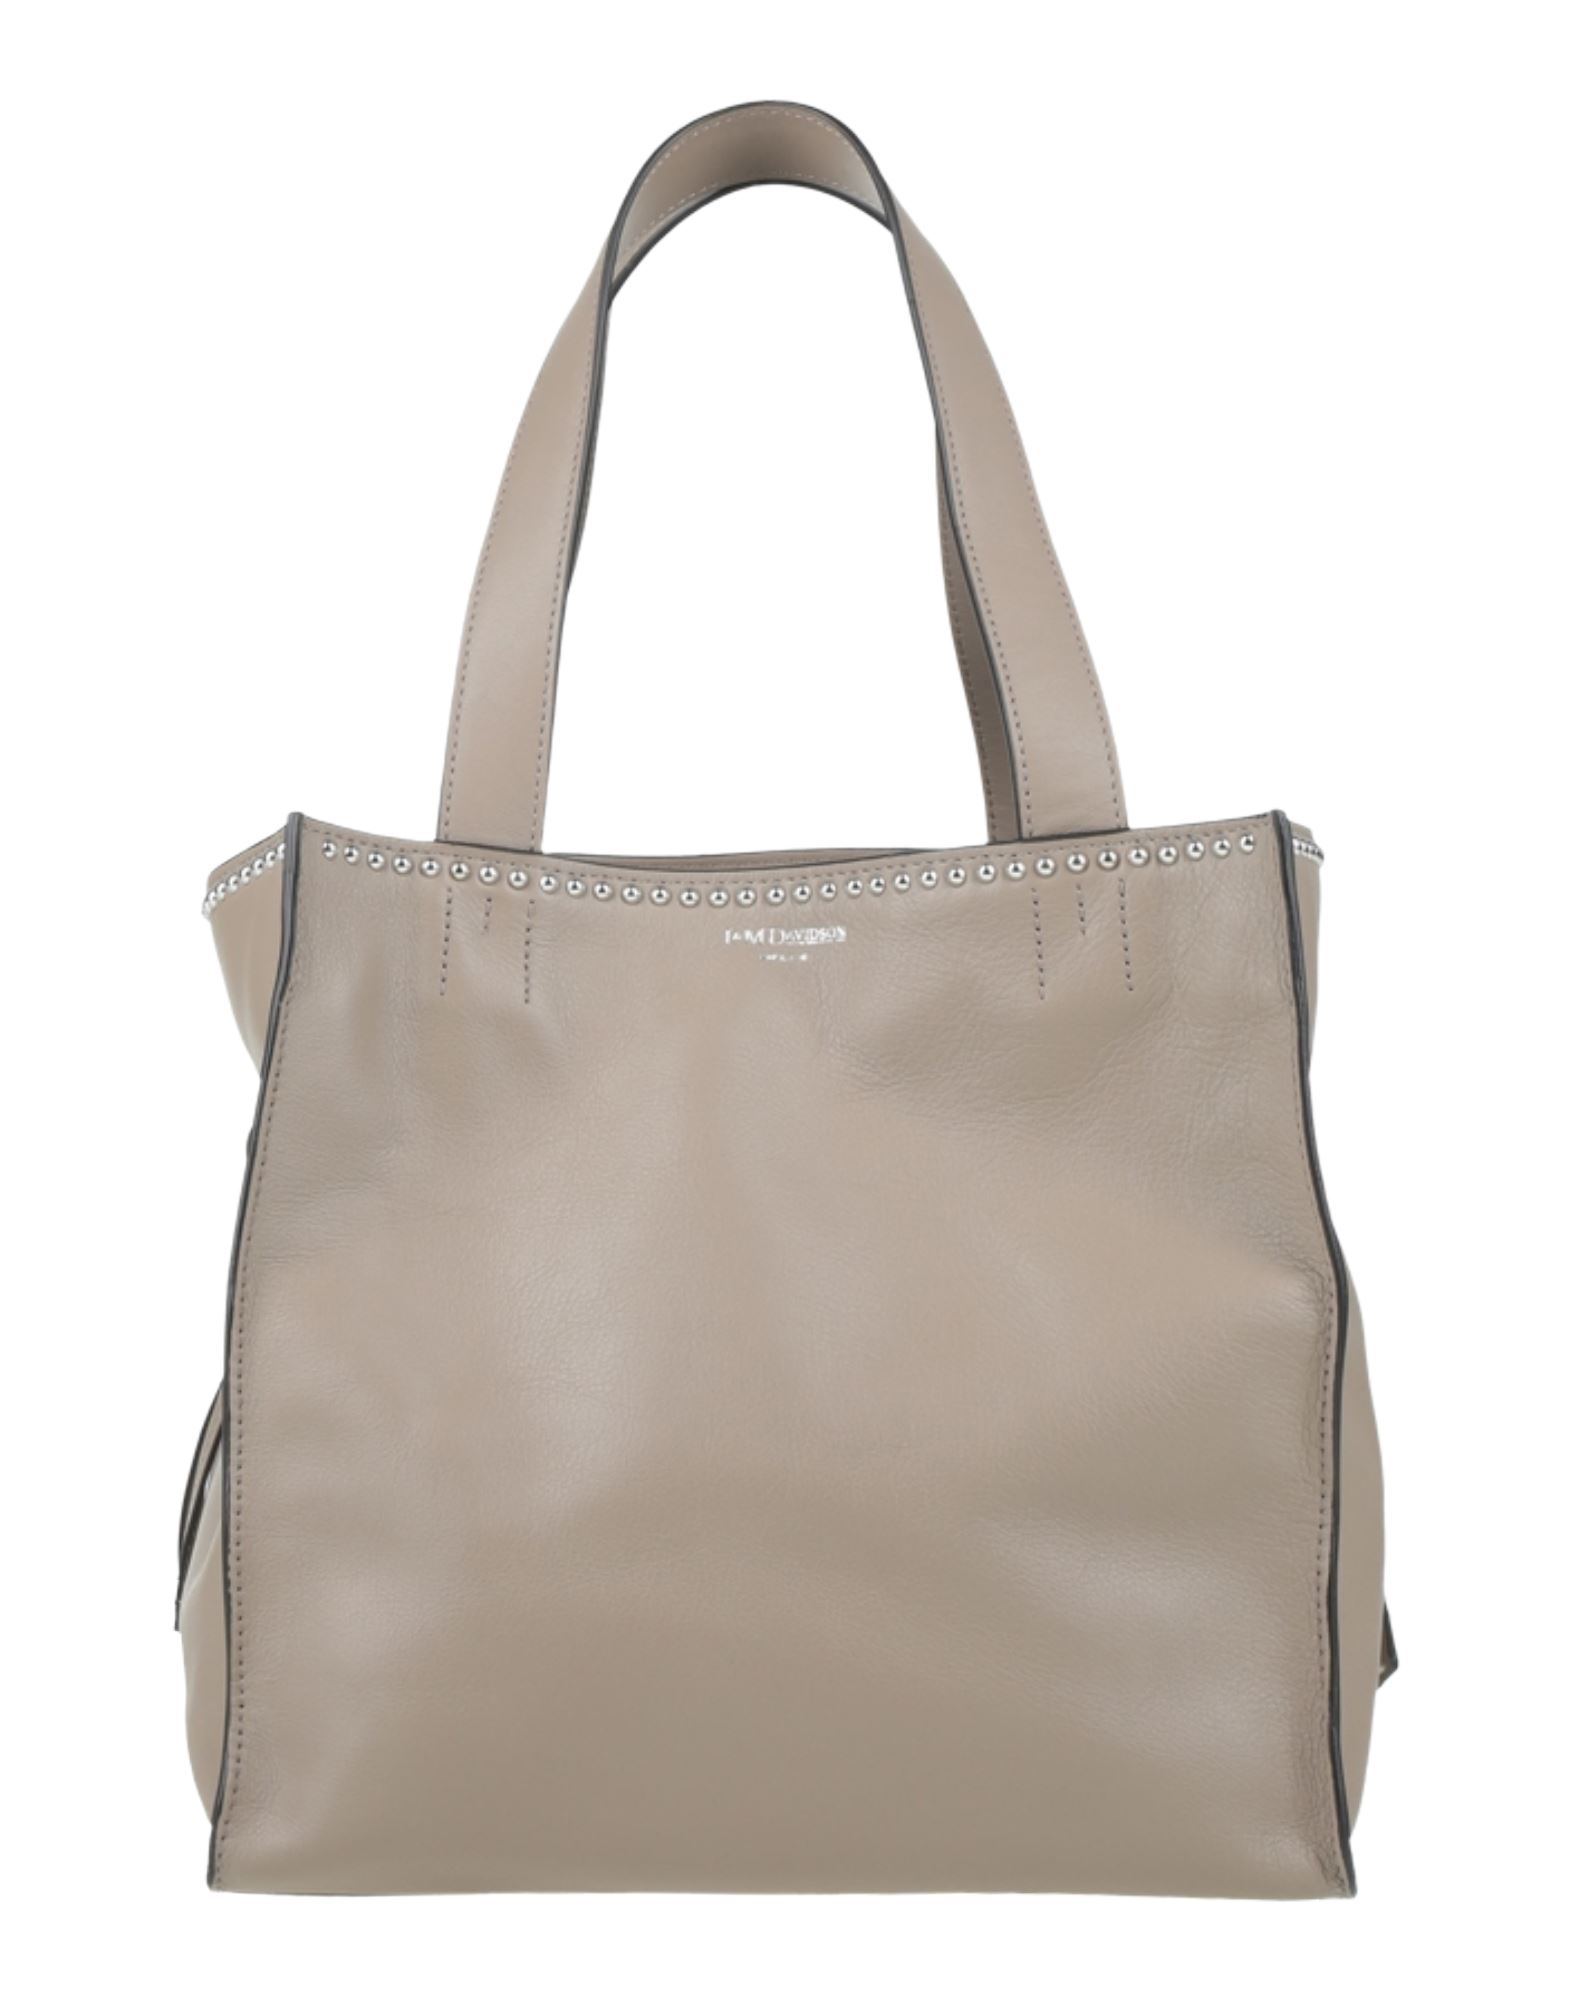 J & M Davidson Handbags In Light Brown